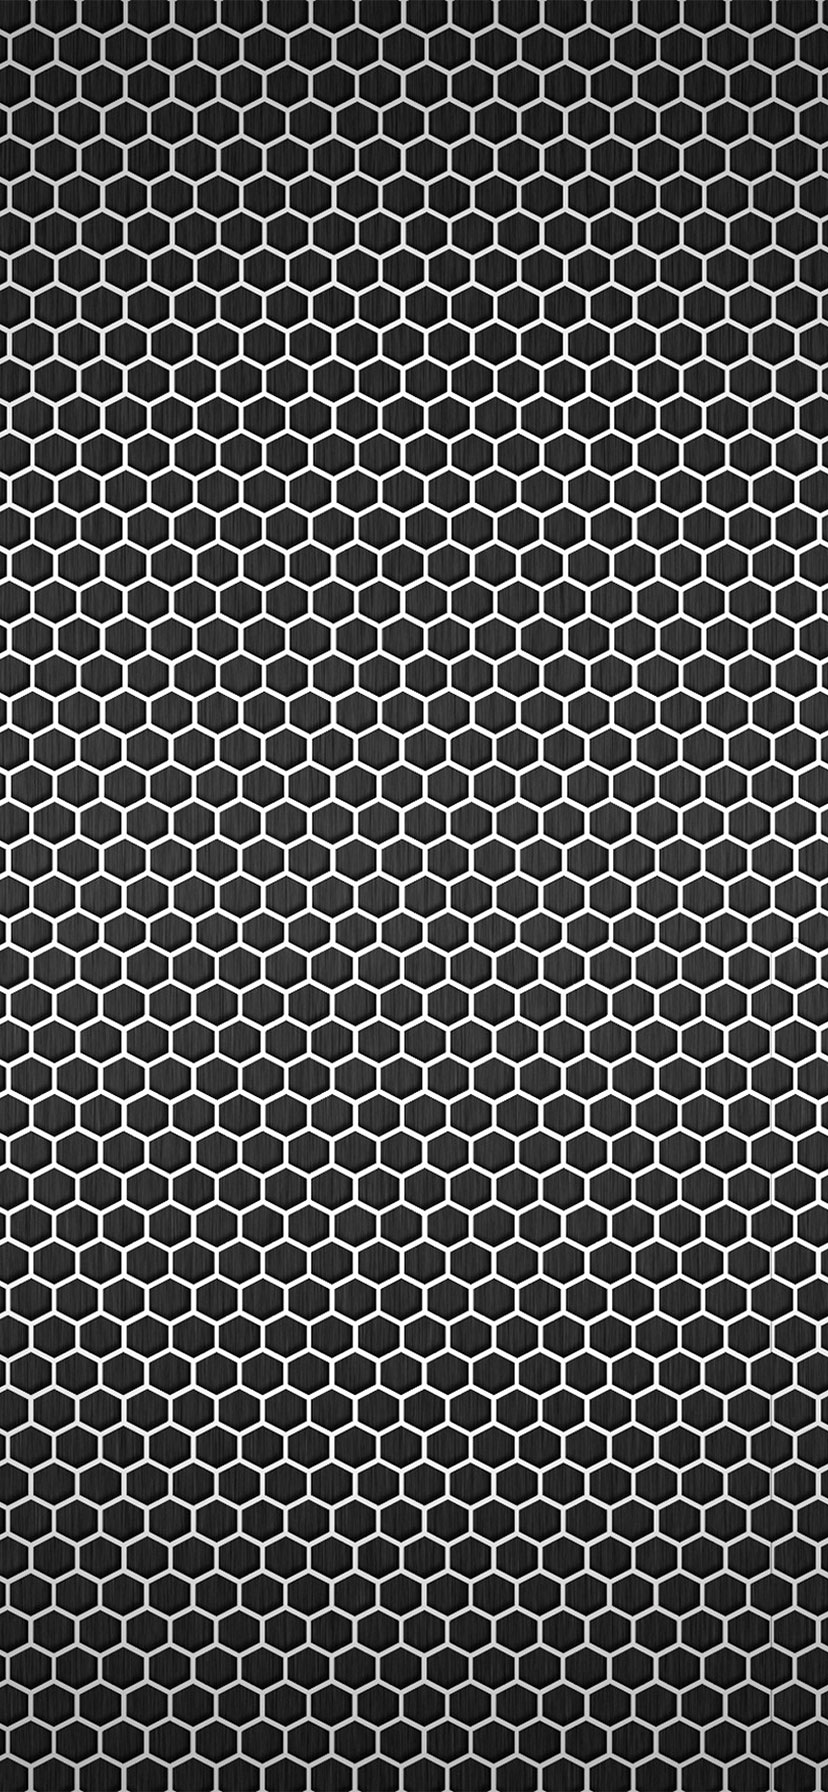 Pattern Wallpaper Iphone Carbon Fiber Carbon Fibre Texture Hd Wallpaper Backgrounds Download